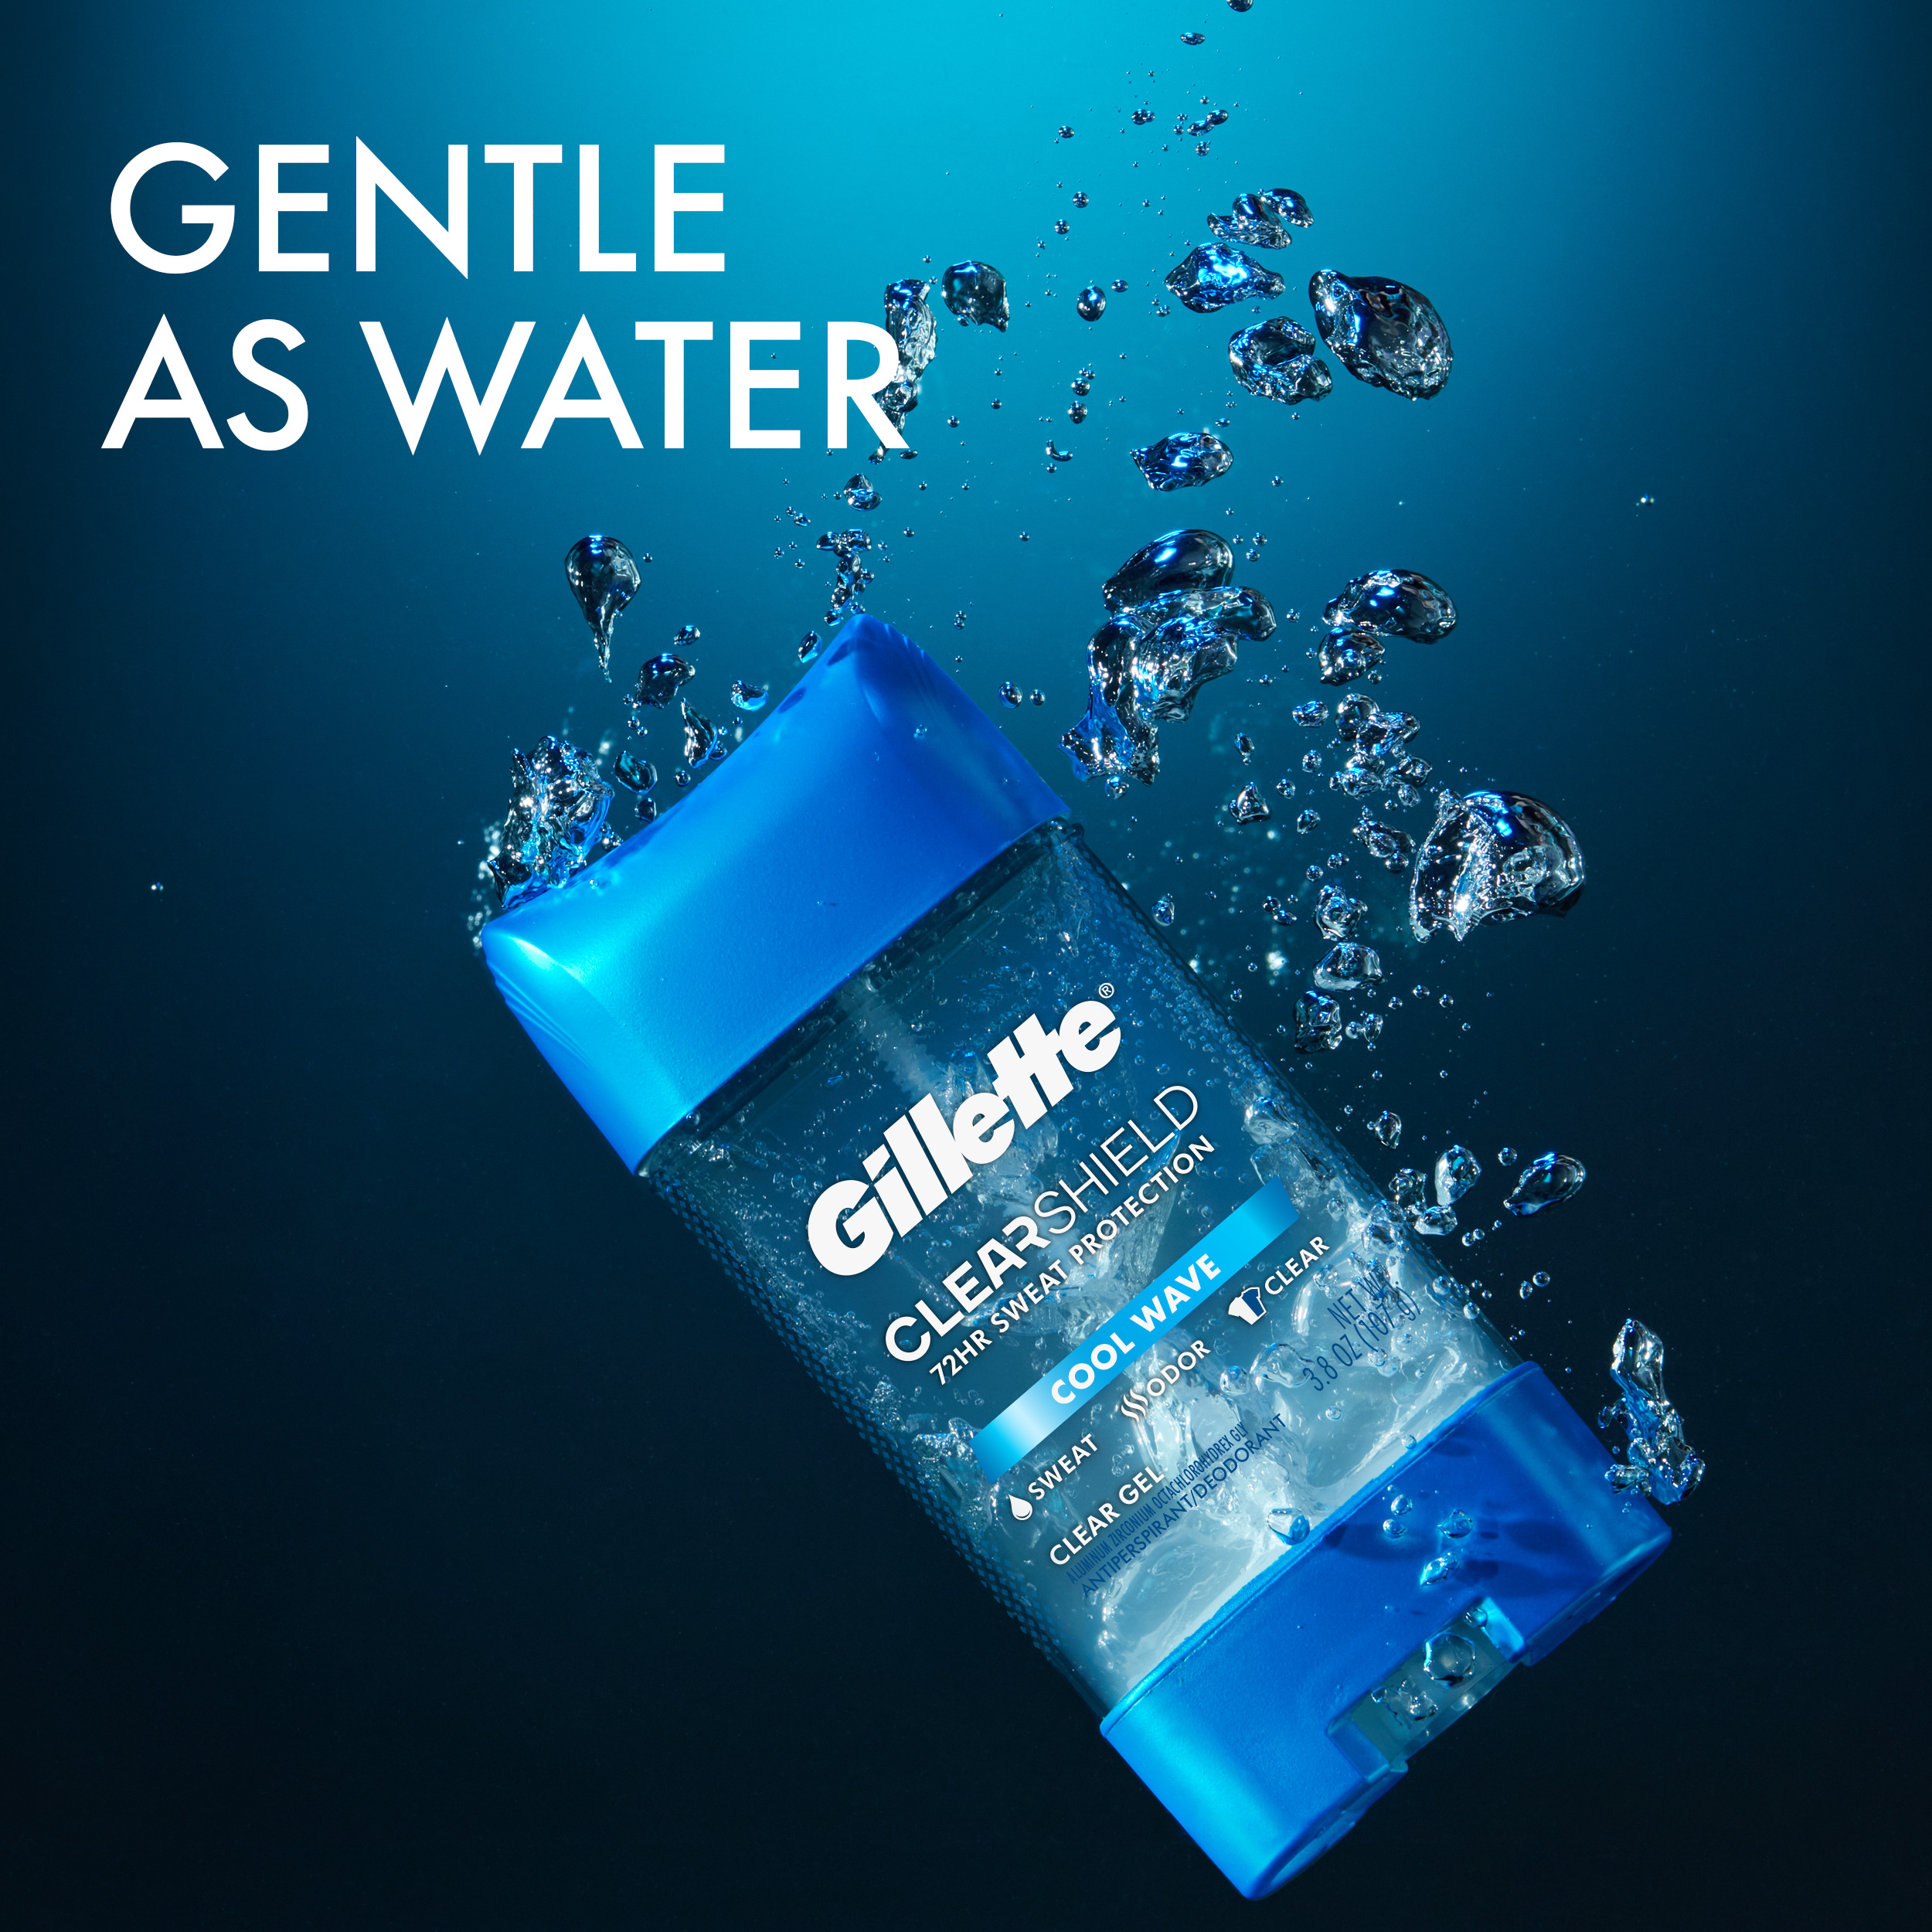 Gillette Antiperspirant Deodorant for Men, Clear Gel, Cool Wave, Twin Pack, 3.8oz - image 5 of 8